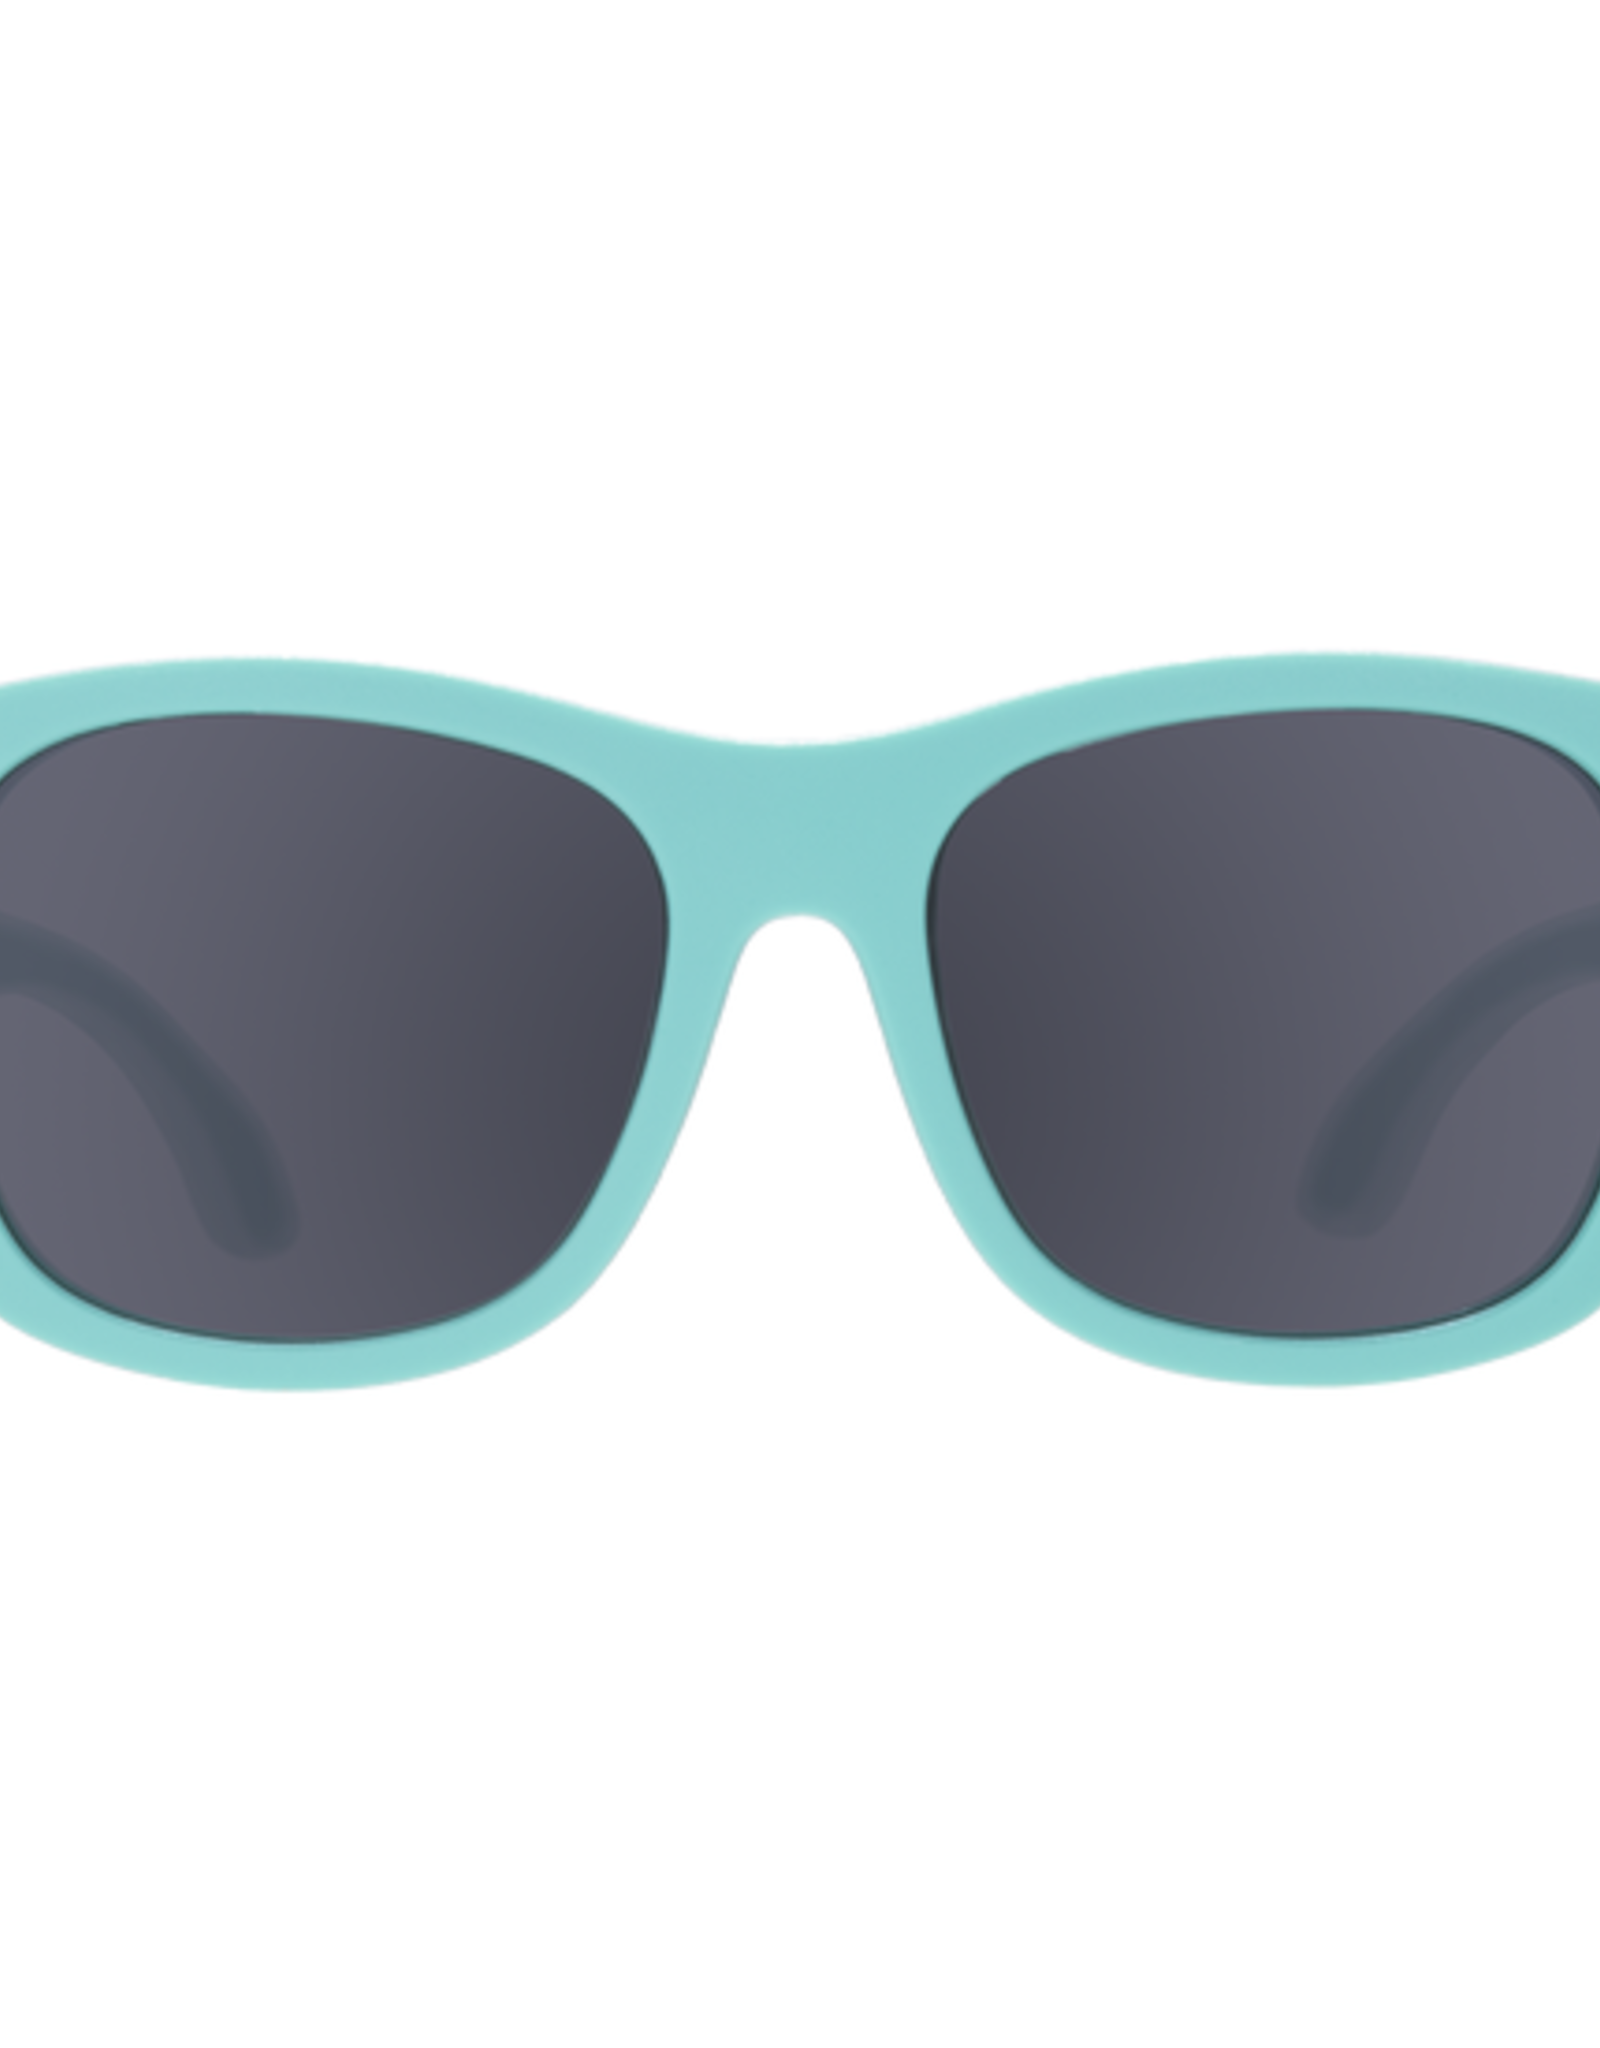 Babiators Navigator Sunglasses, Totally Turquoise